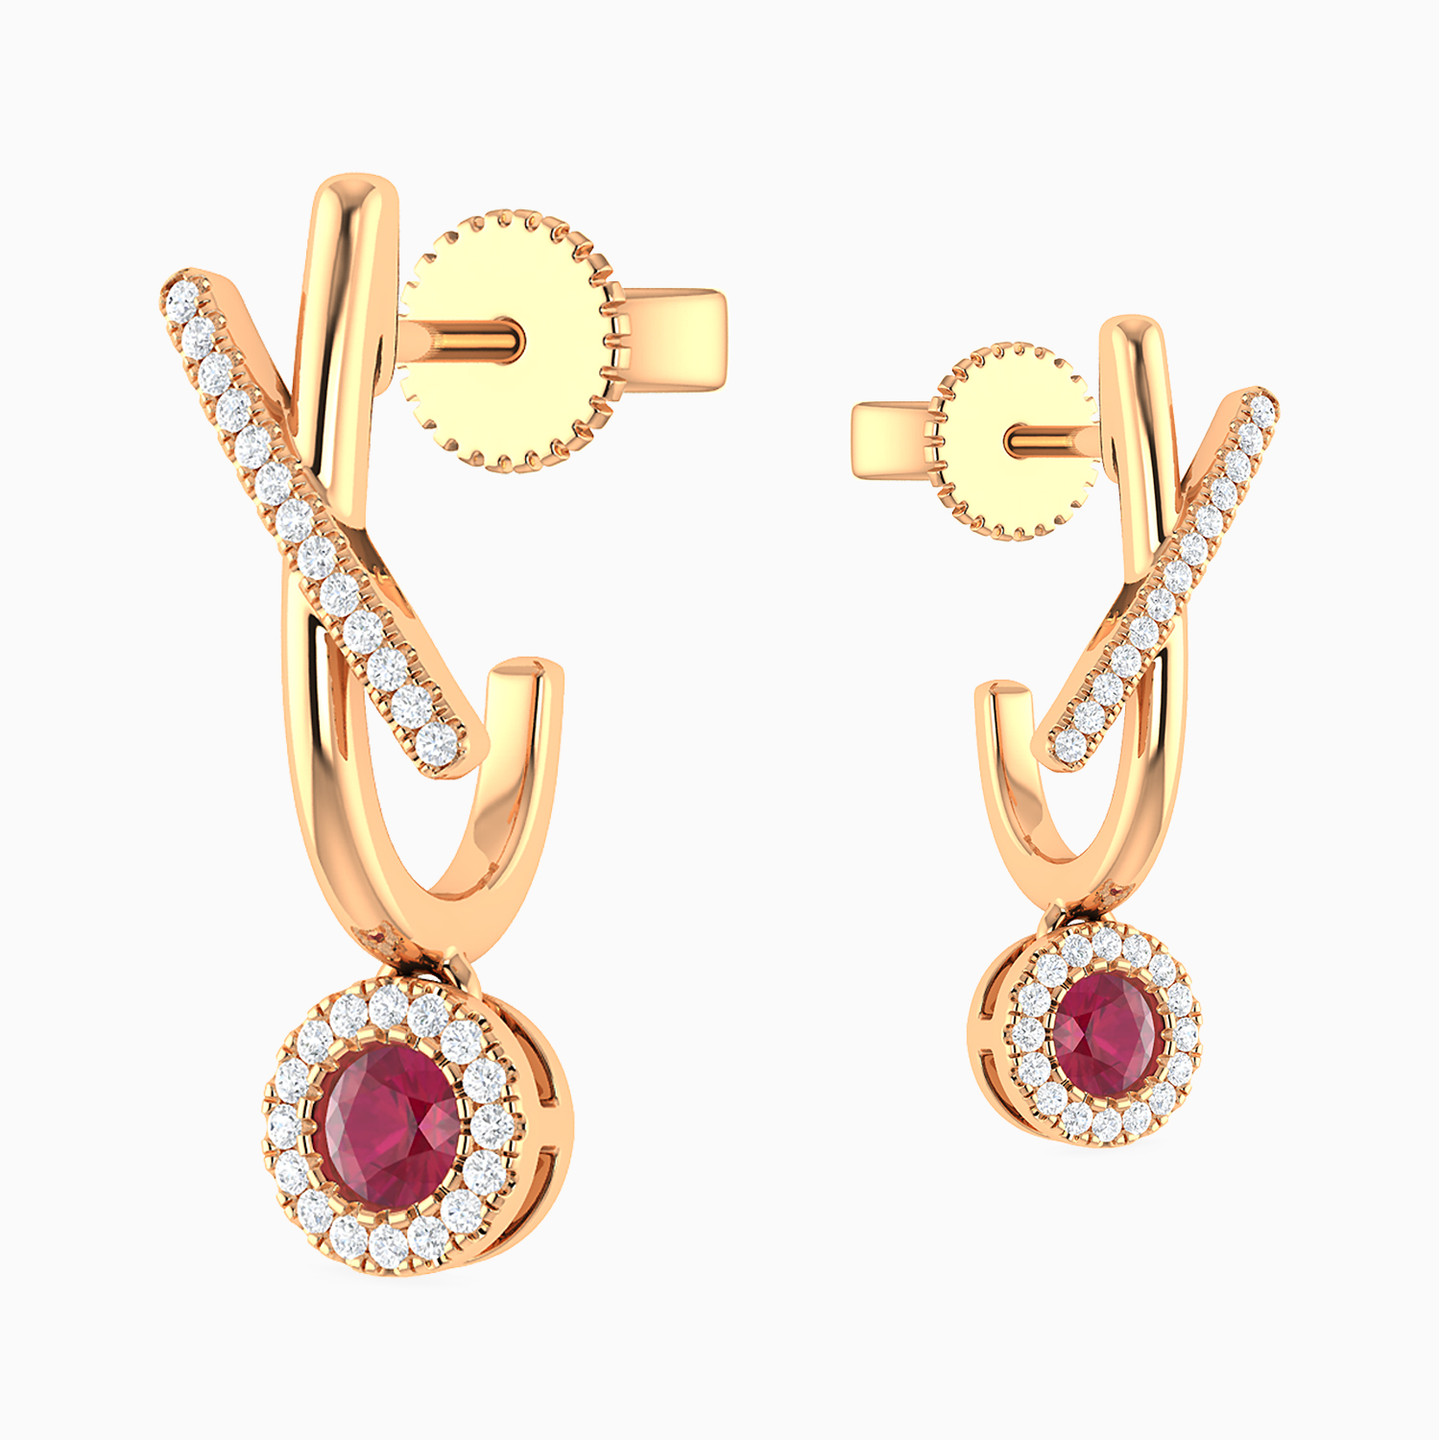 18K Gold Diamond & Colored Stones Drop Earrings - 4